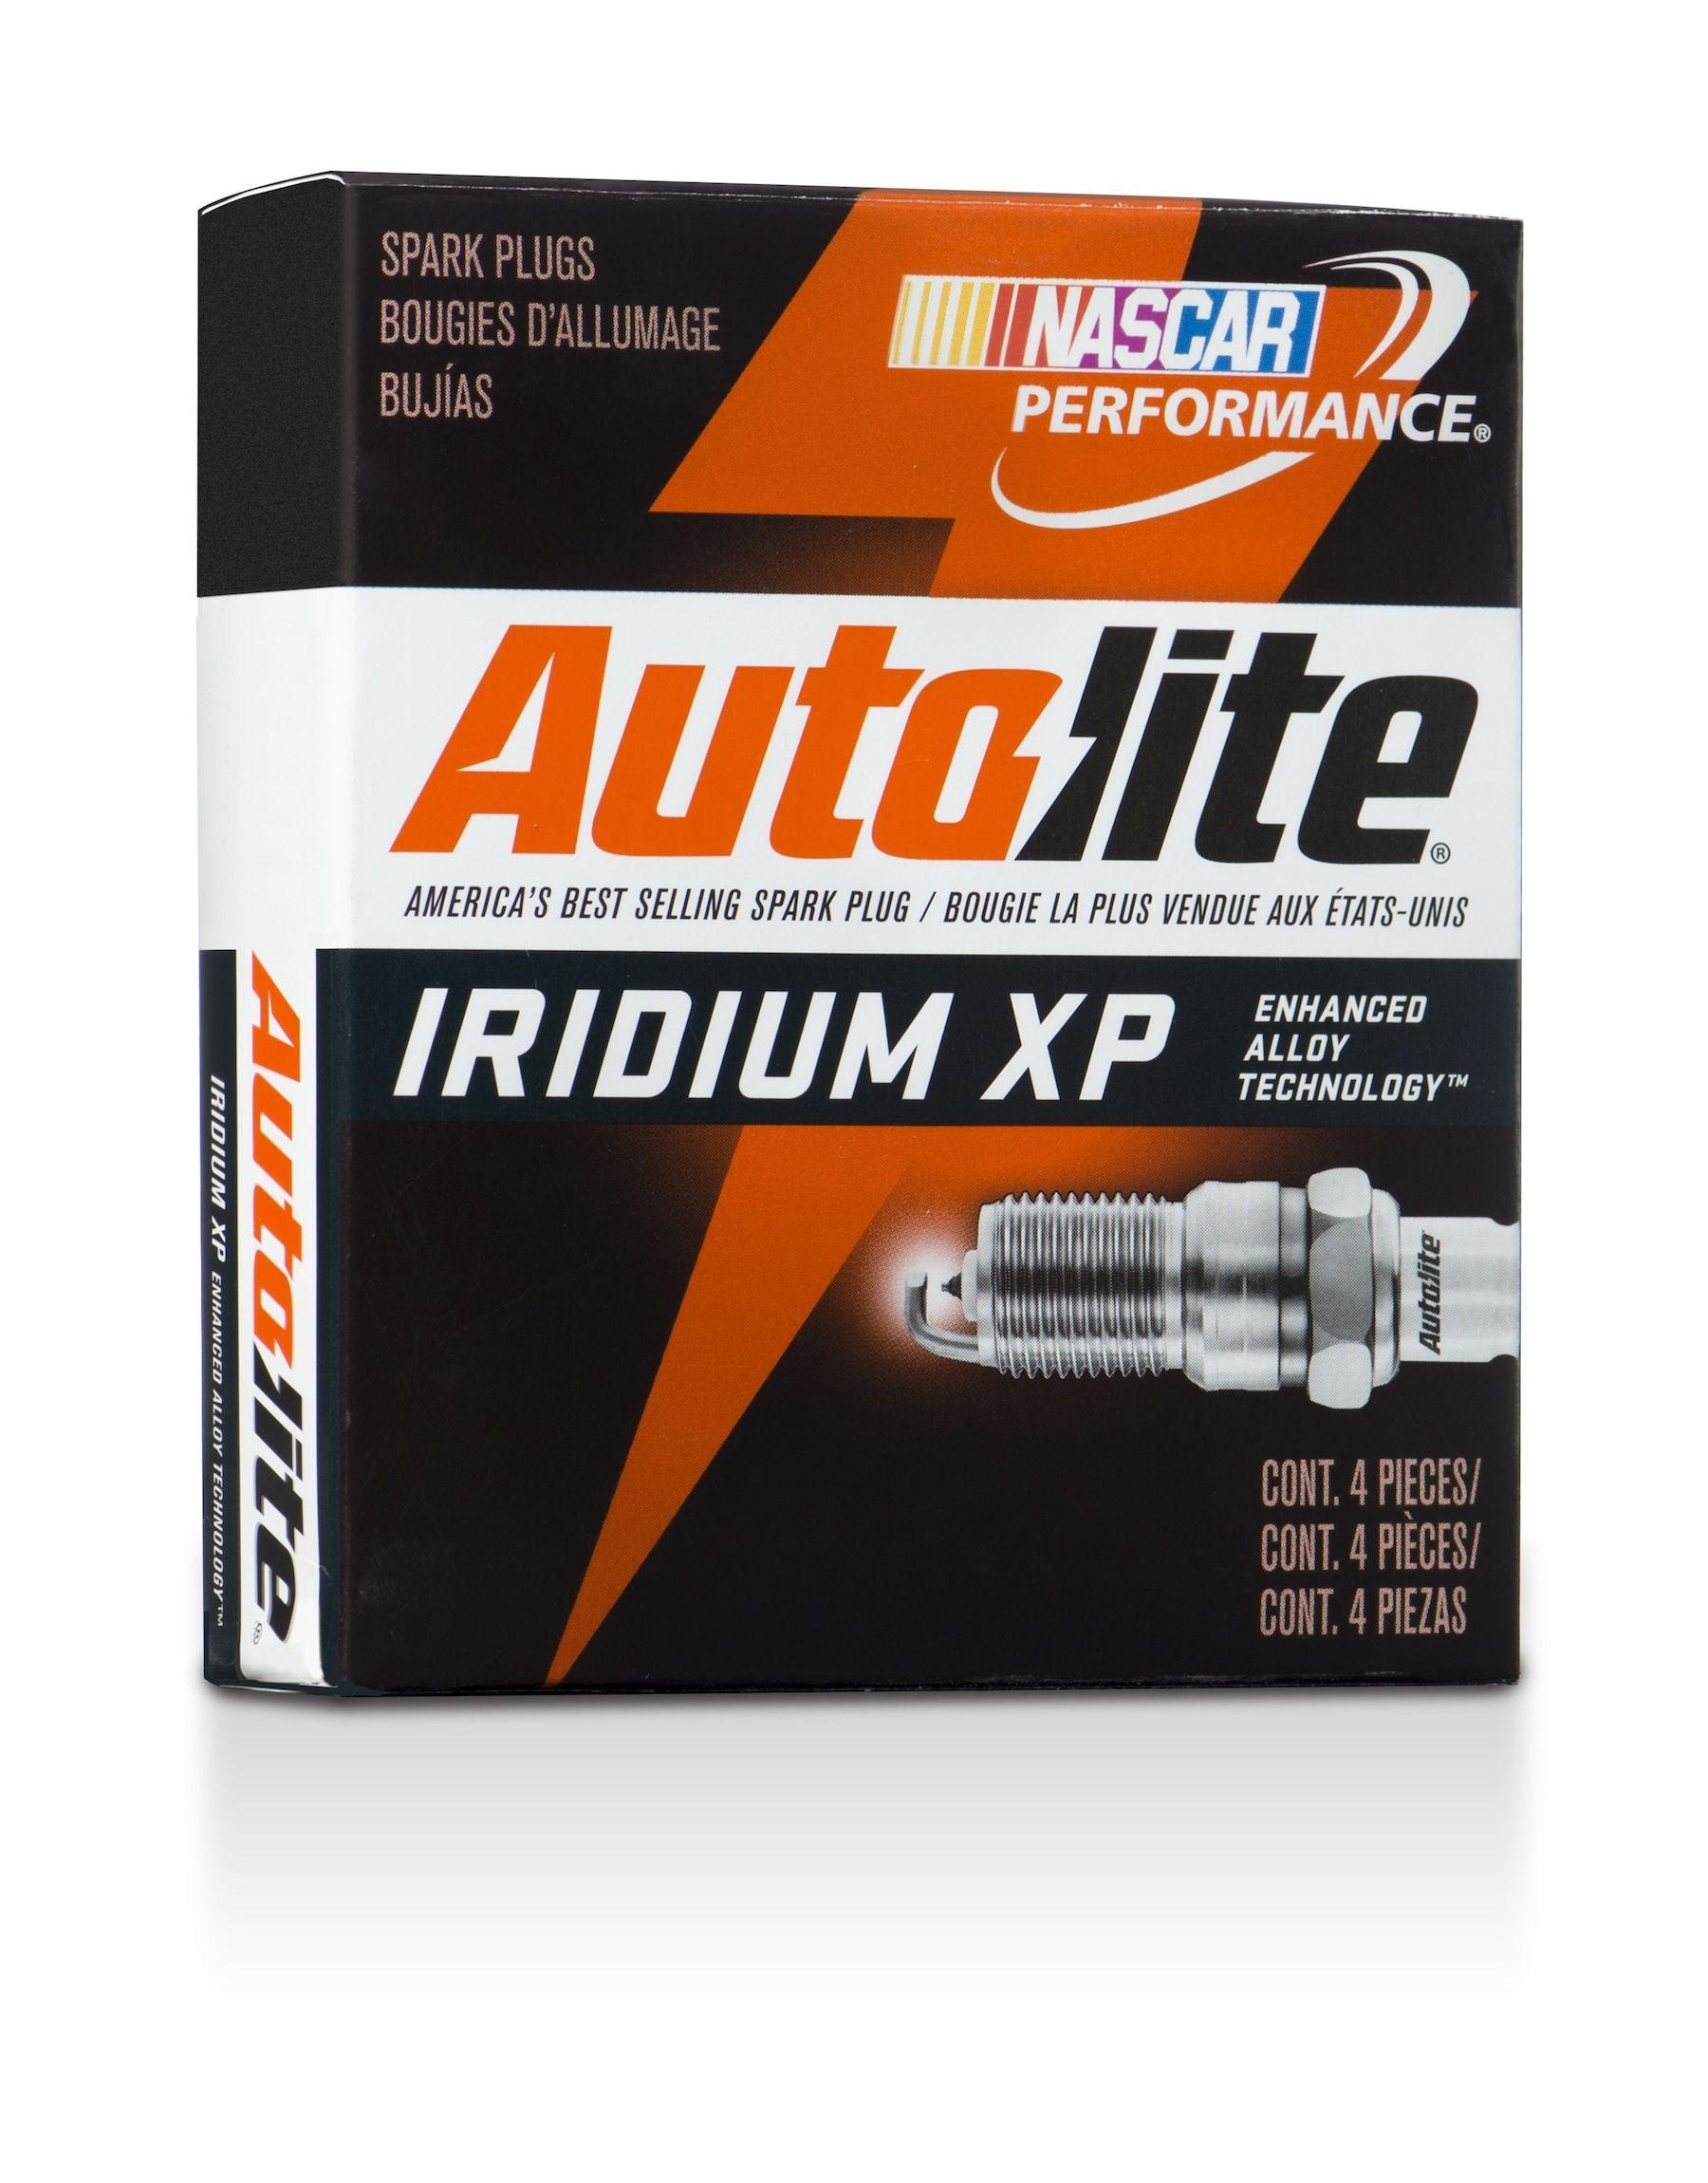 New Autolite Spark Plugs Logo - New Lifetime Limited Warranty On Autolite Iridium XP Enhanced Alloy ...